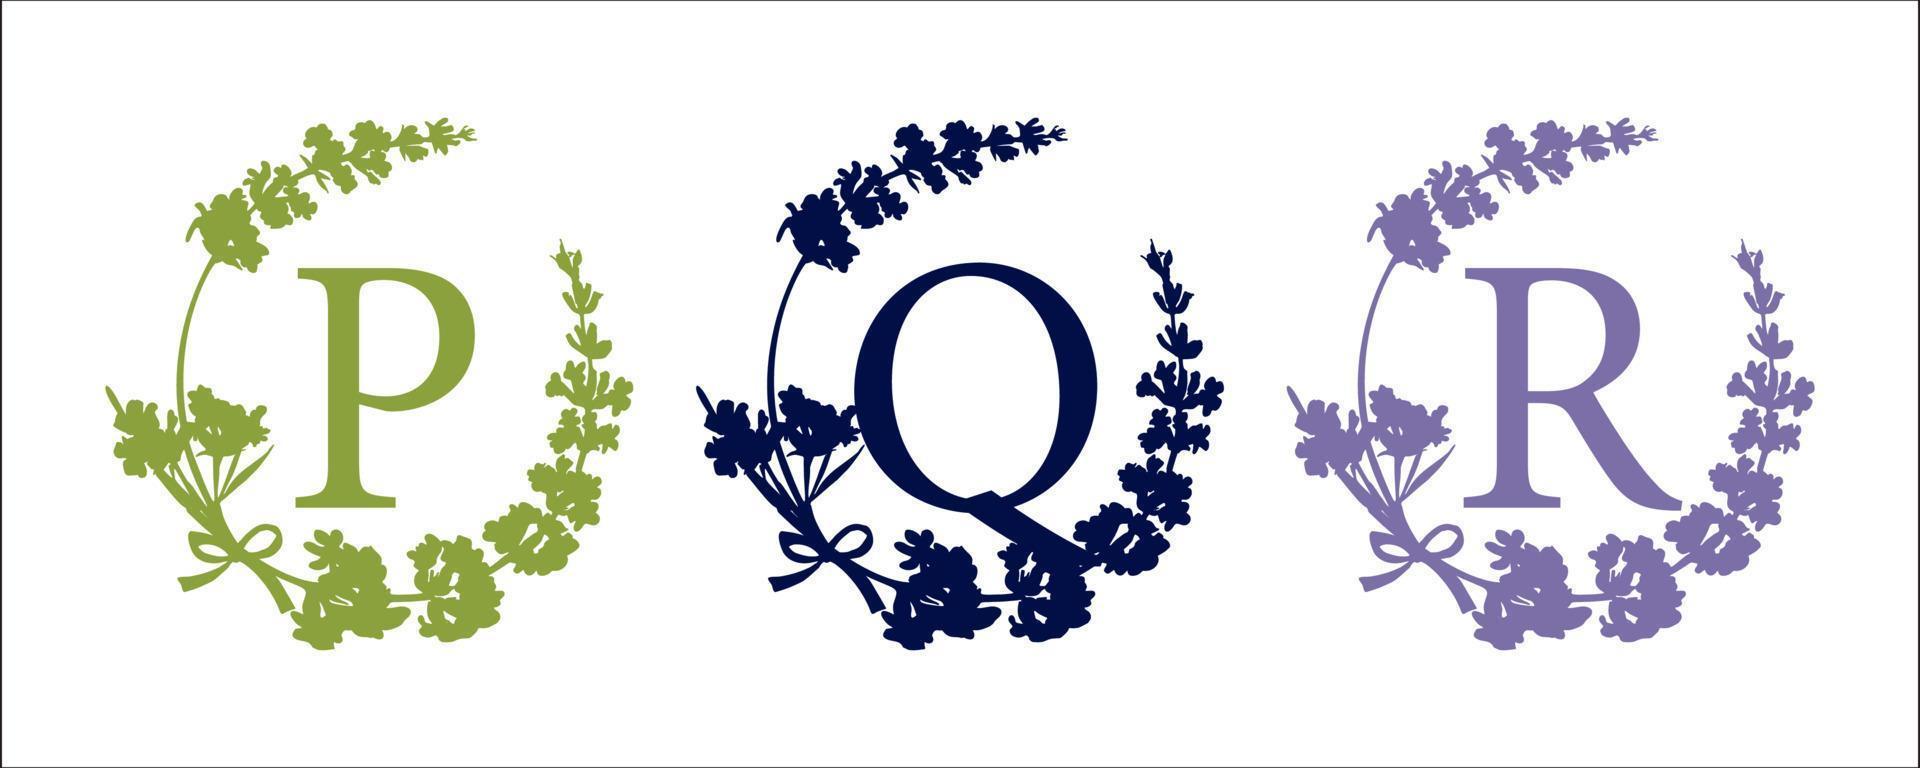 P Q R letter. Set modern hand-drawn silhouette sketch illustrations. Lavender flower wreath with alphabet monogram. good idea for wedding decor. Vintage vector typographic emblem, logo, label design.